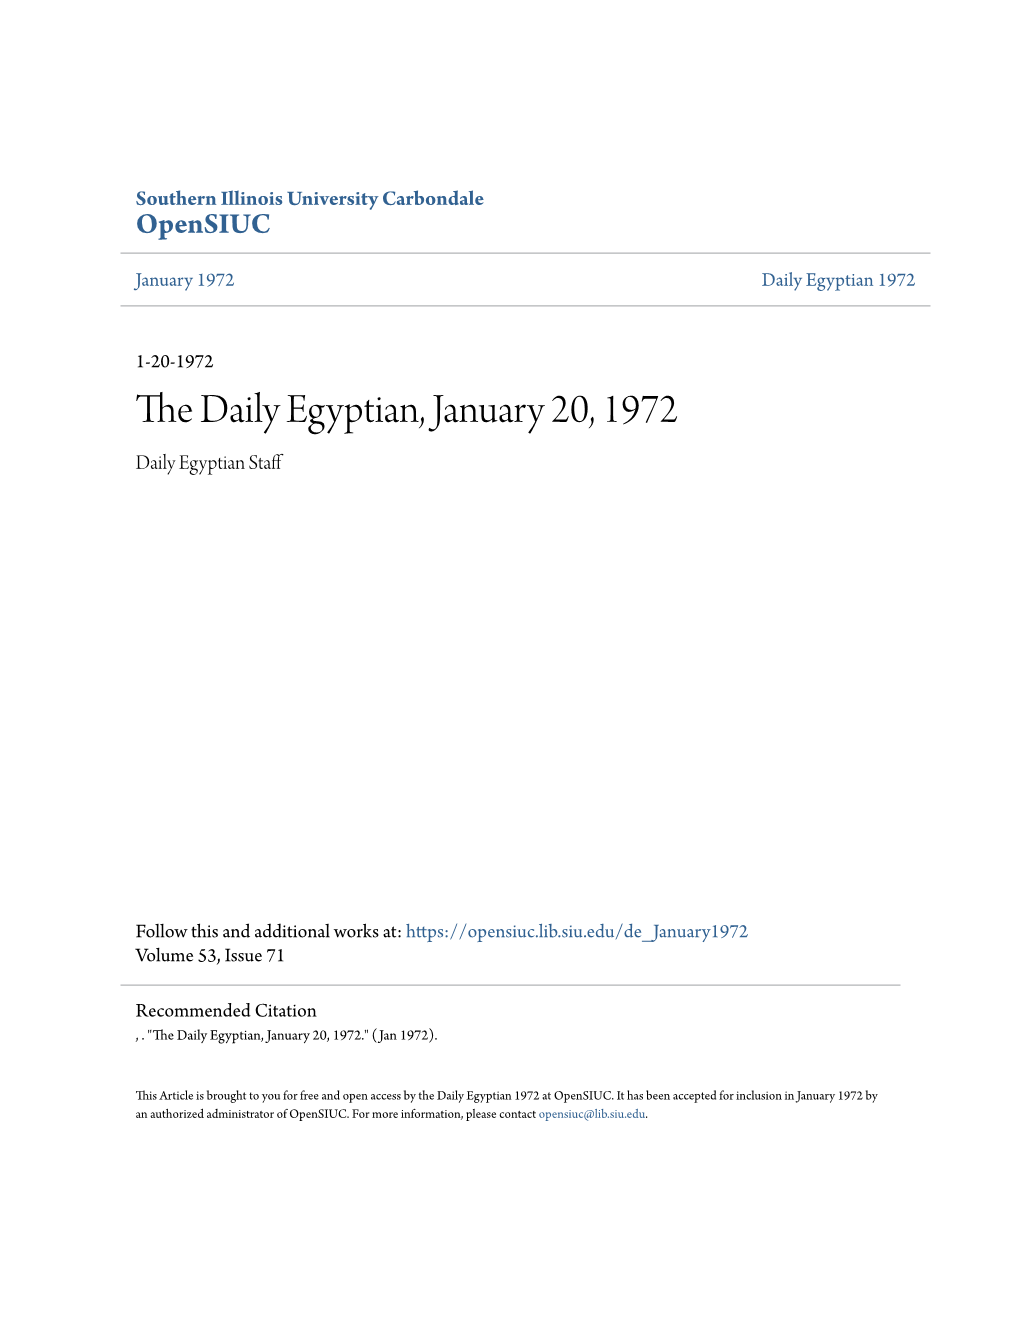 The Daily Egyptian, January 20, 1972